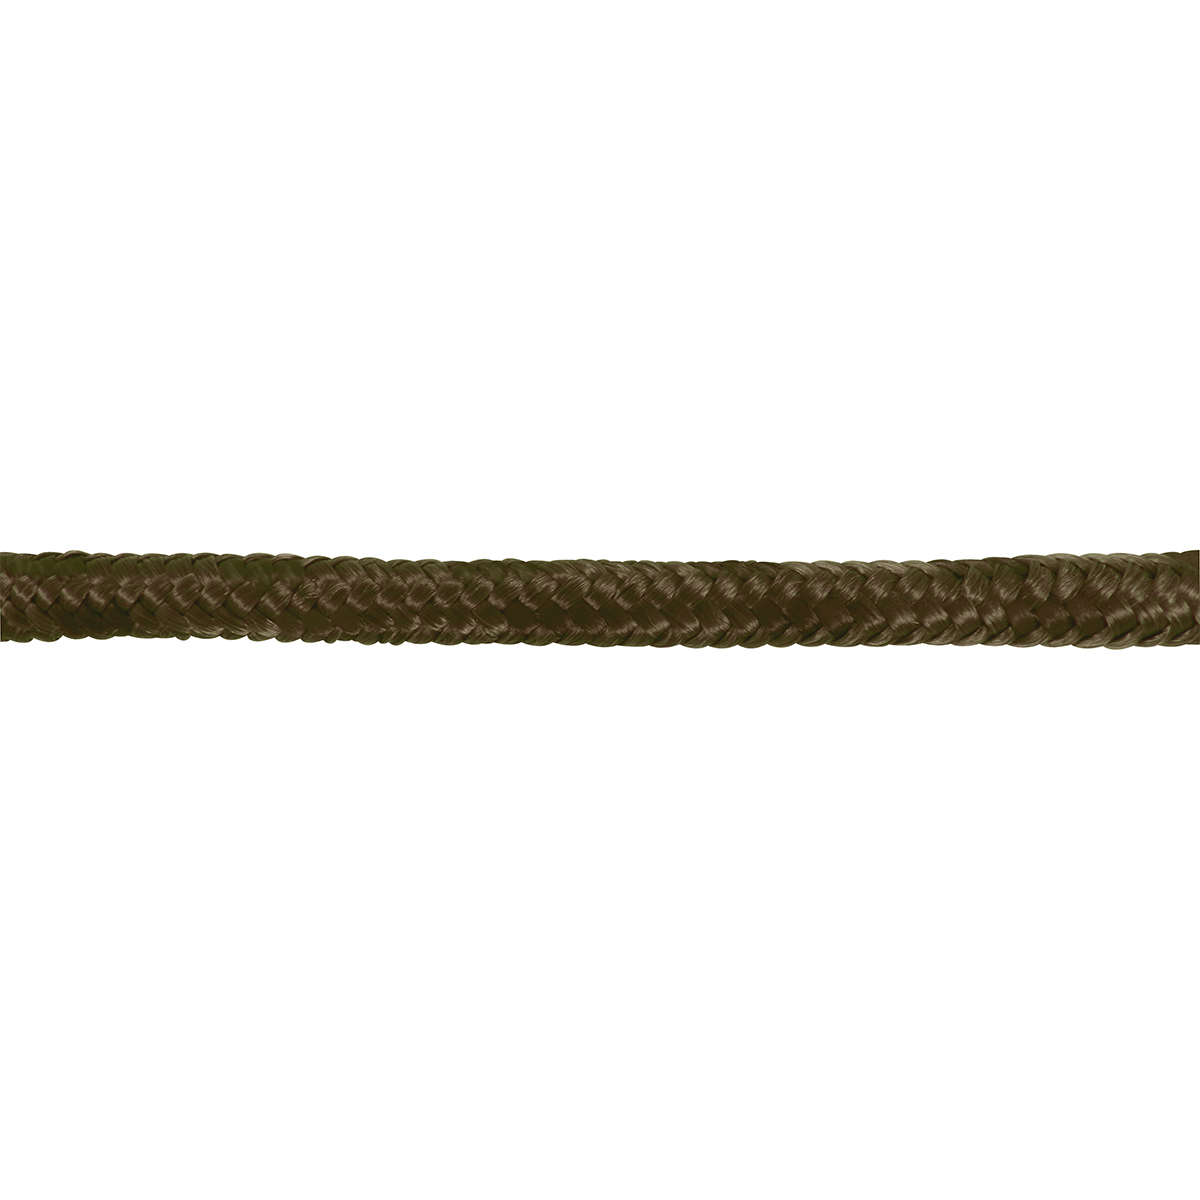 Polypropylene Diamond Braid Rope - Khaki - 5/32-in x 75-ft